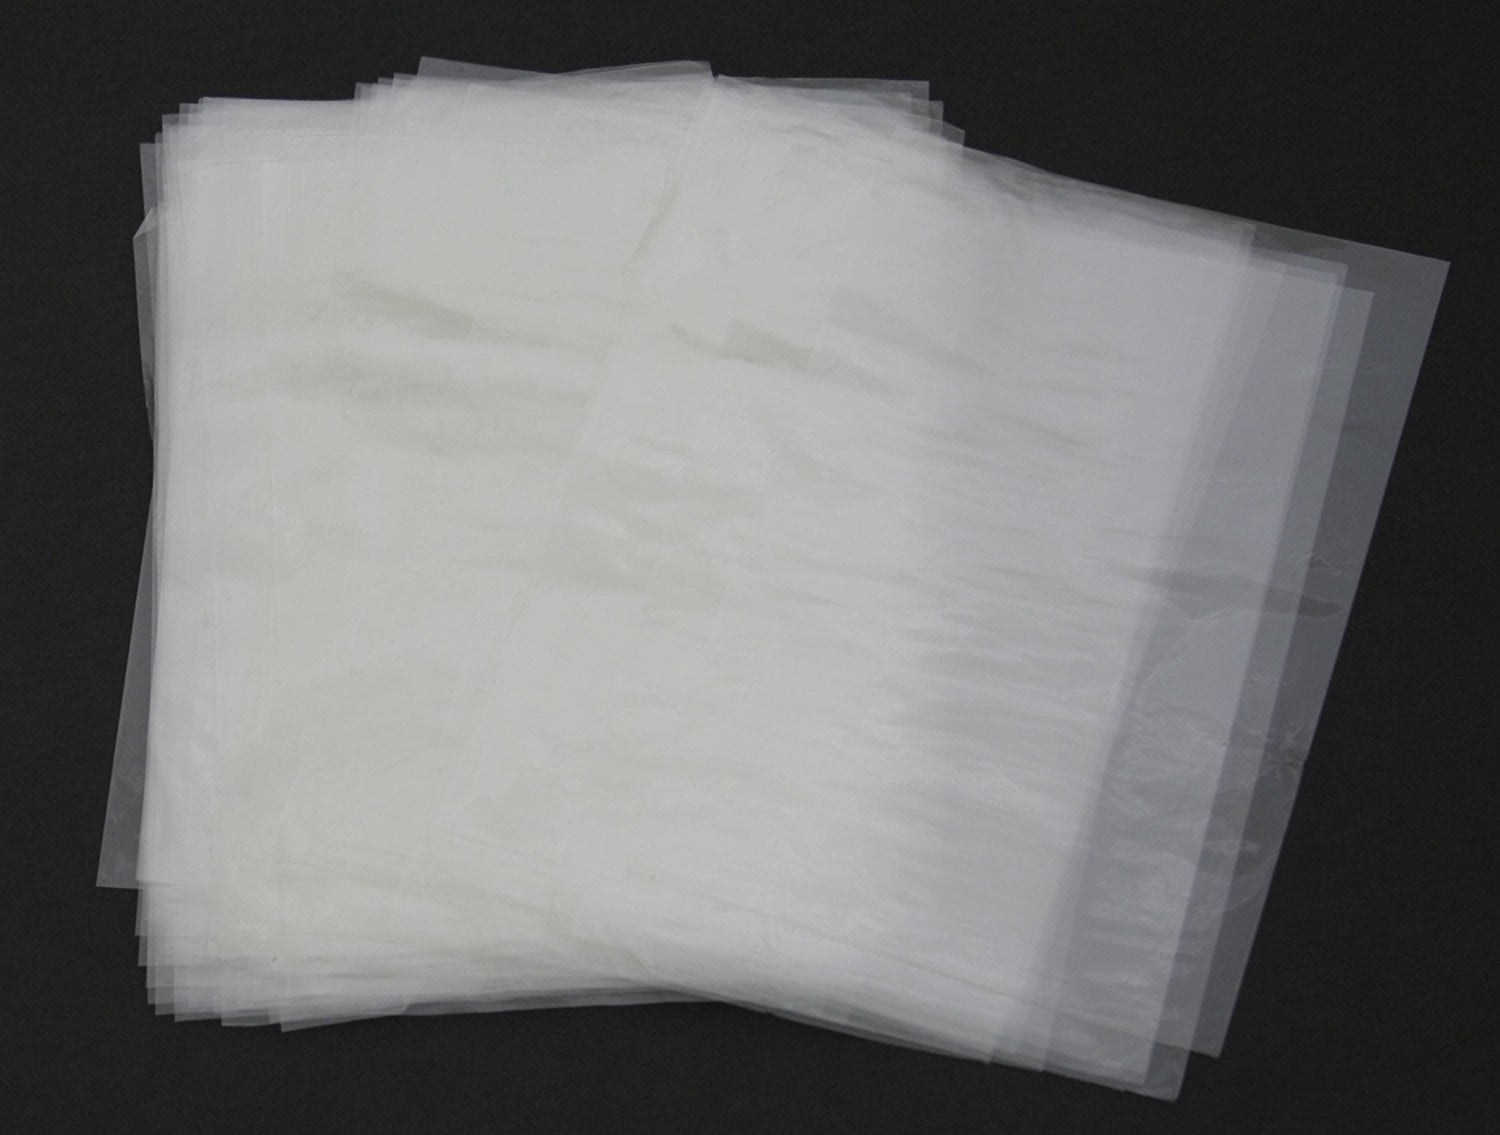 Shrink Wrap Film Flat Bags 6x6 Candles Soap PVC Pieces 25 50 100 250 500 1000 